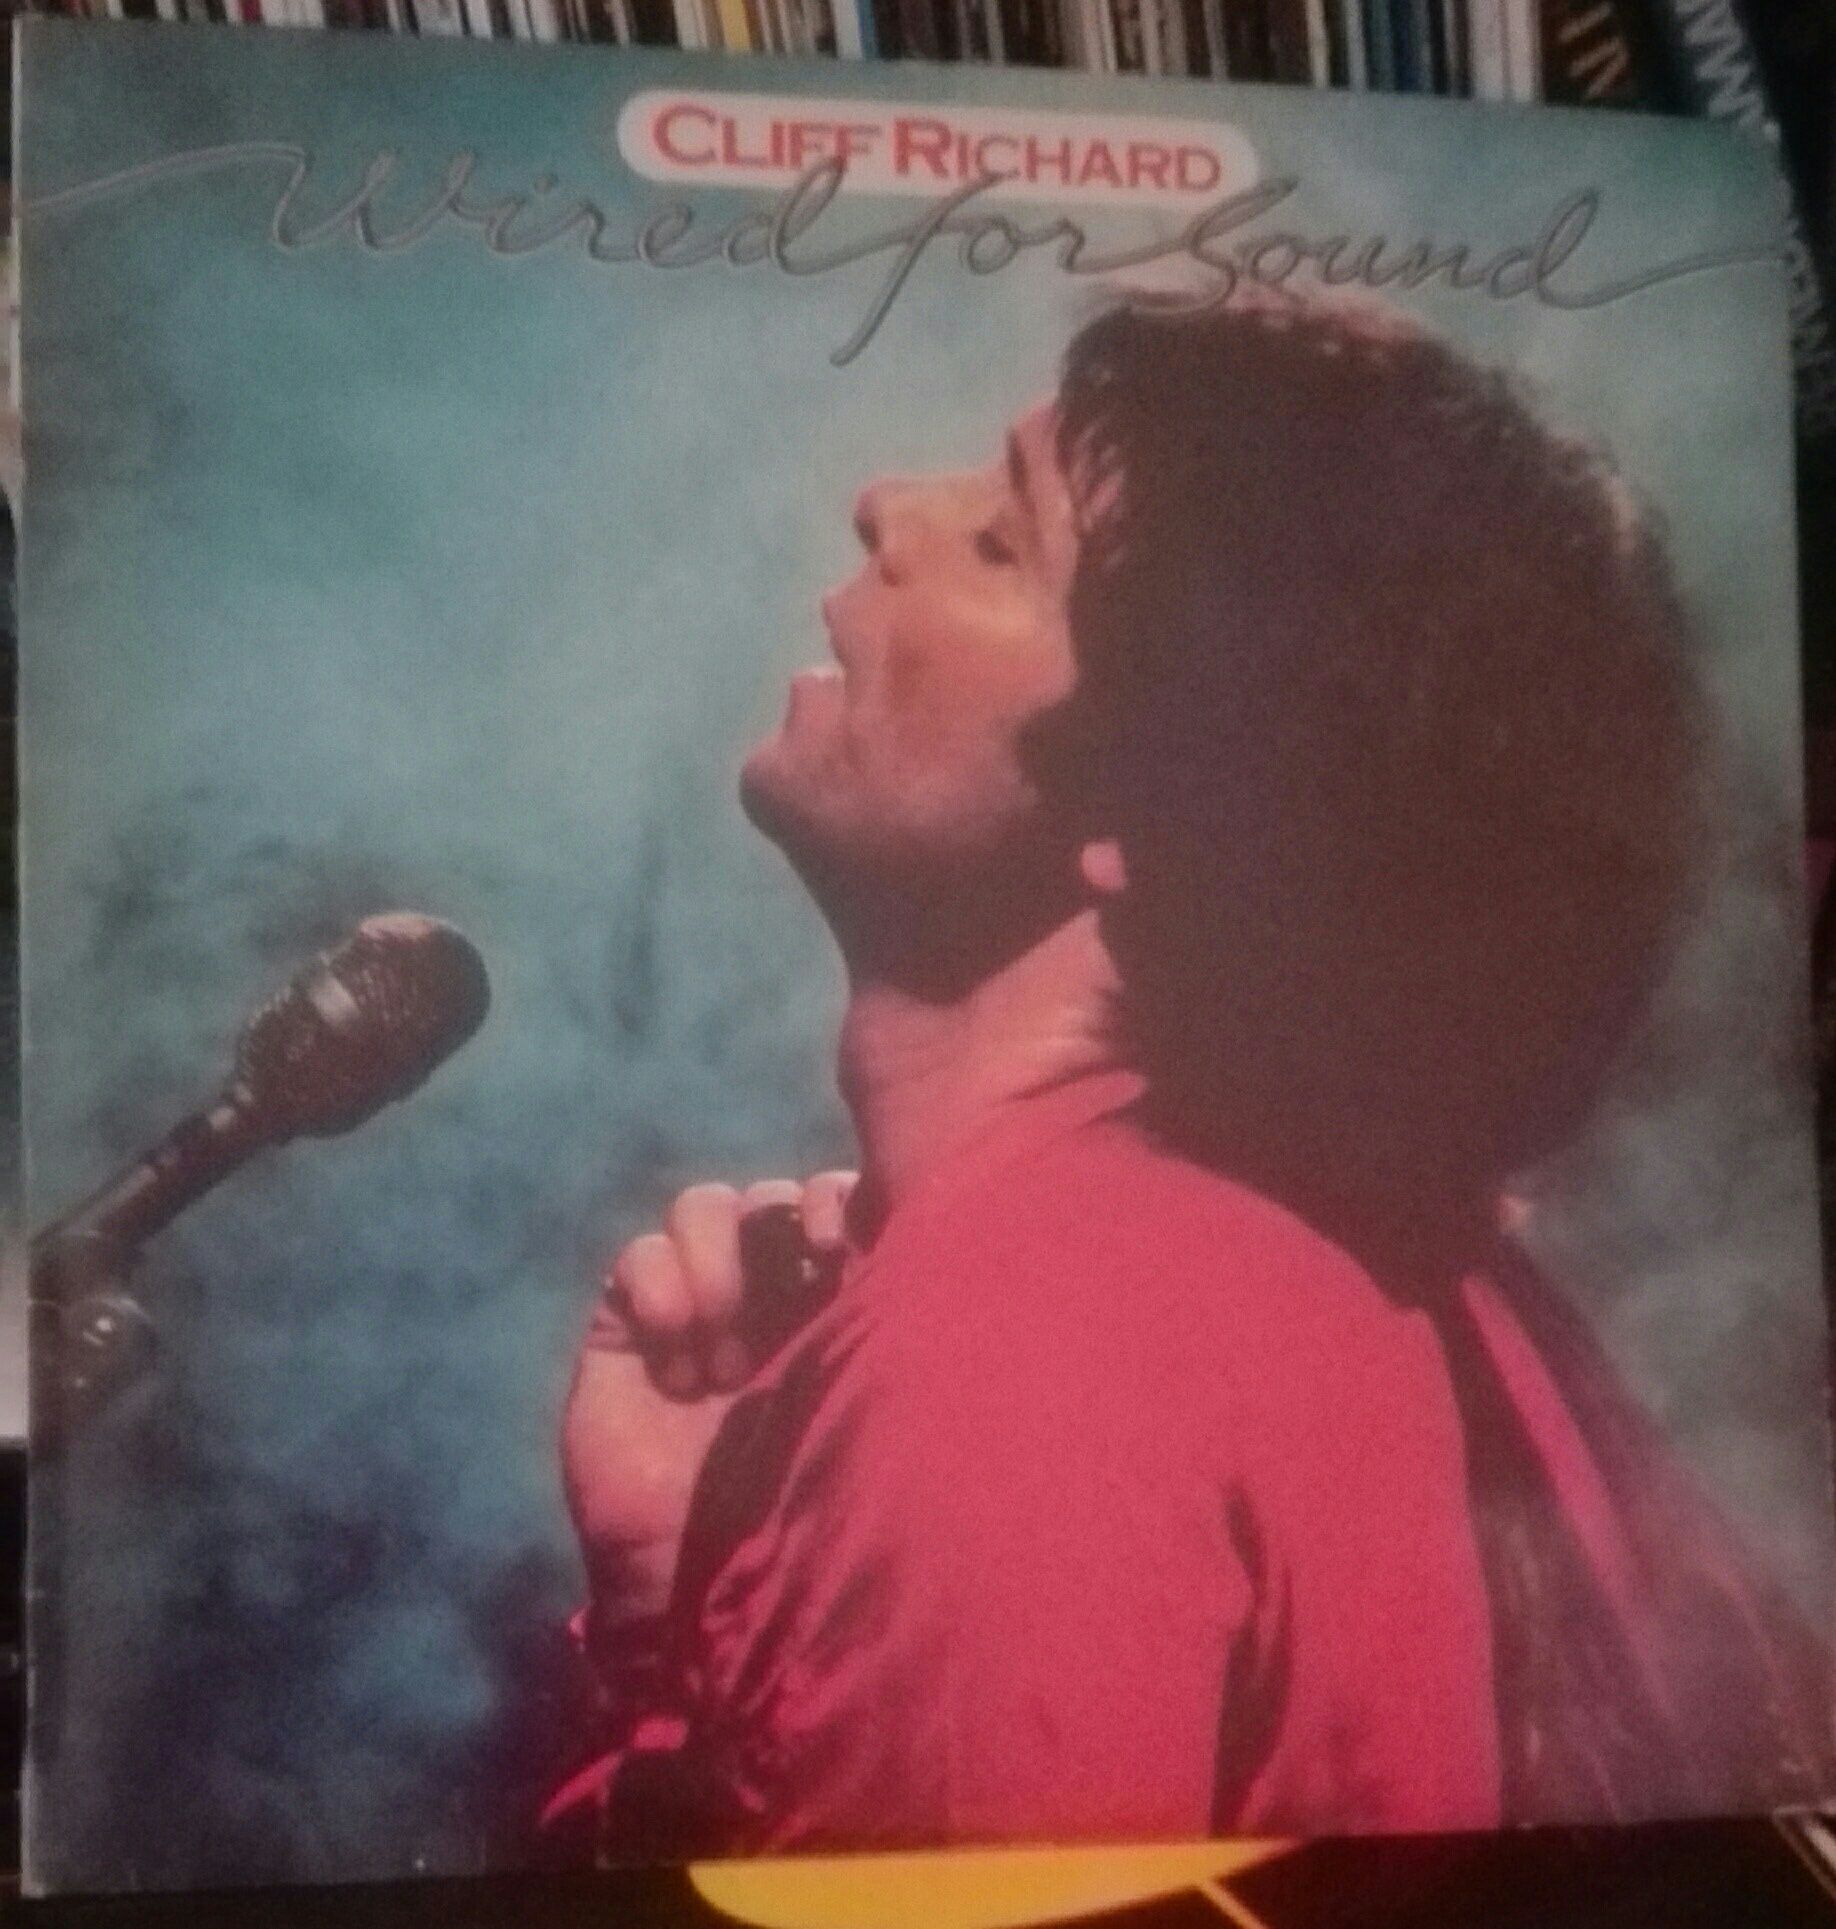 LPs Vinil e livro - Cliff Richard - desde 2€